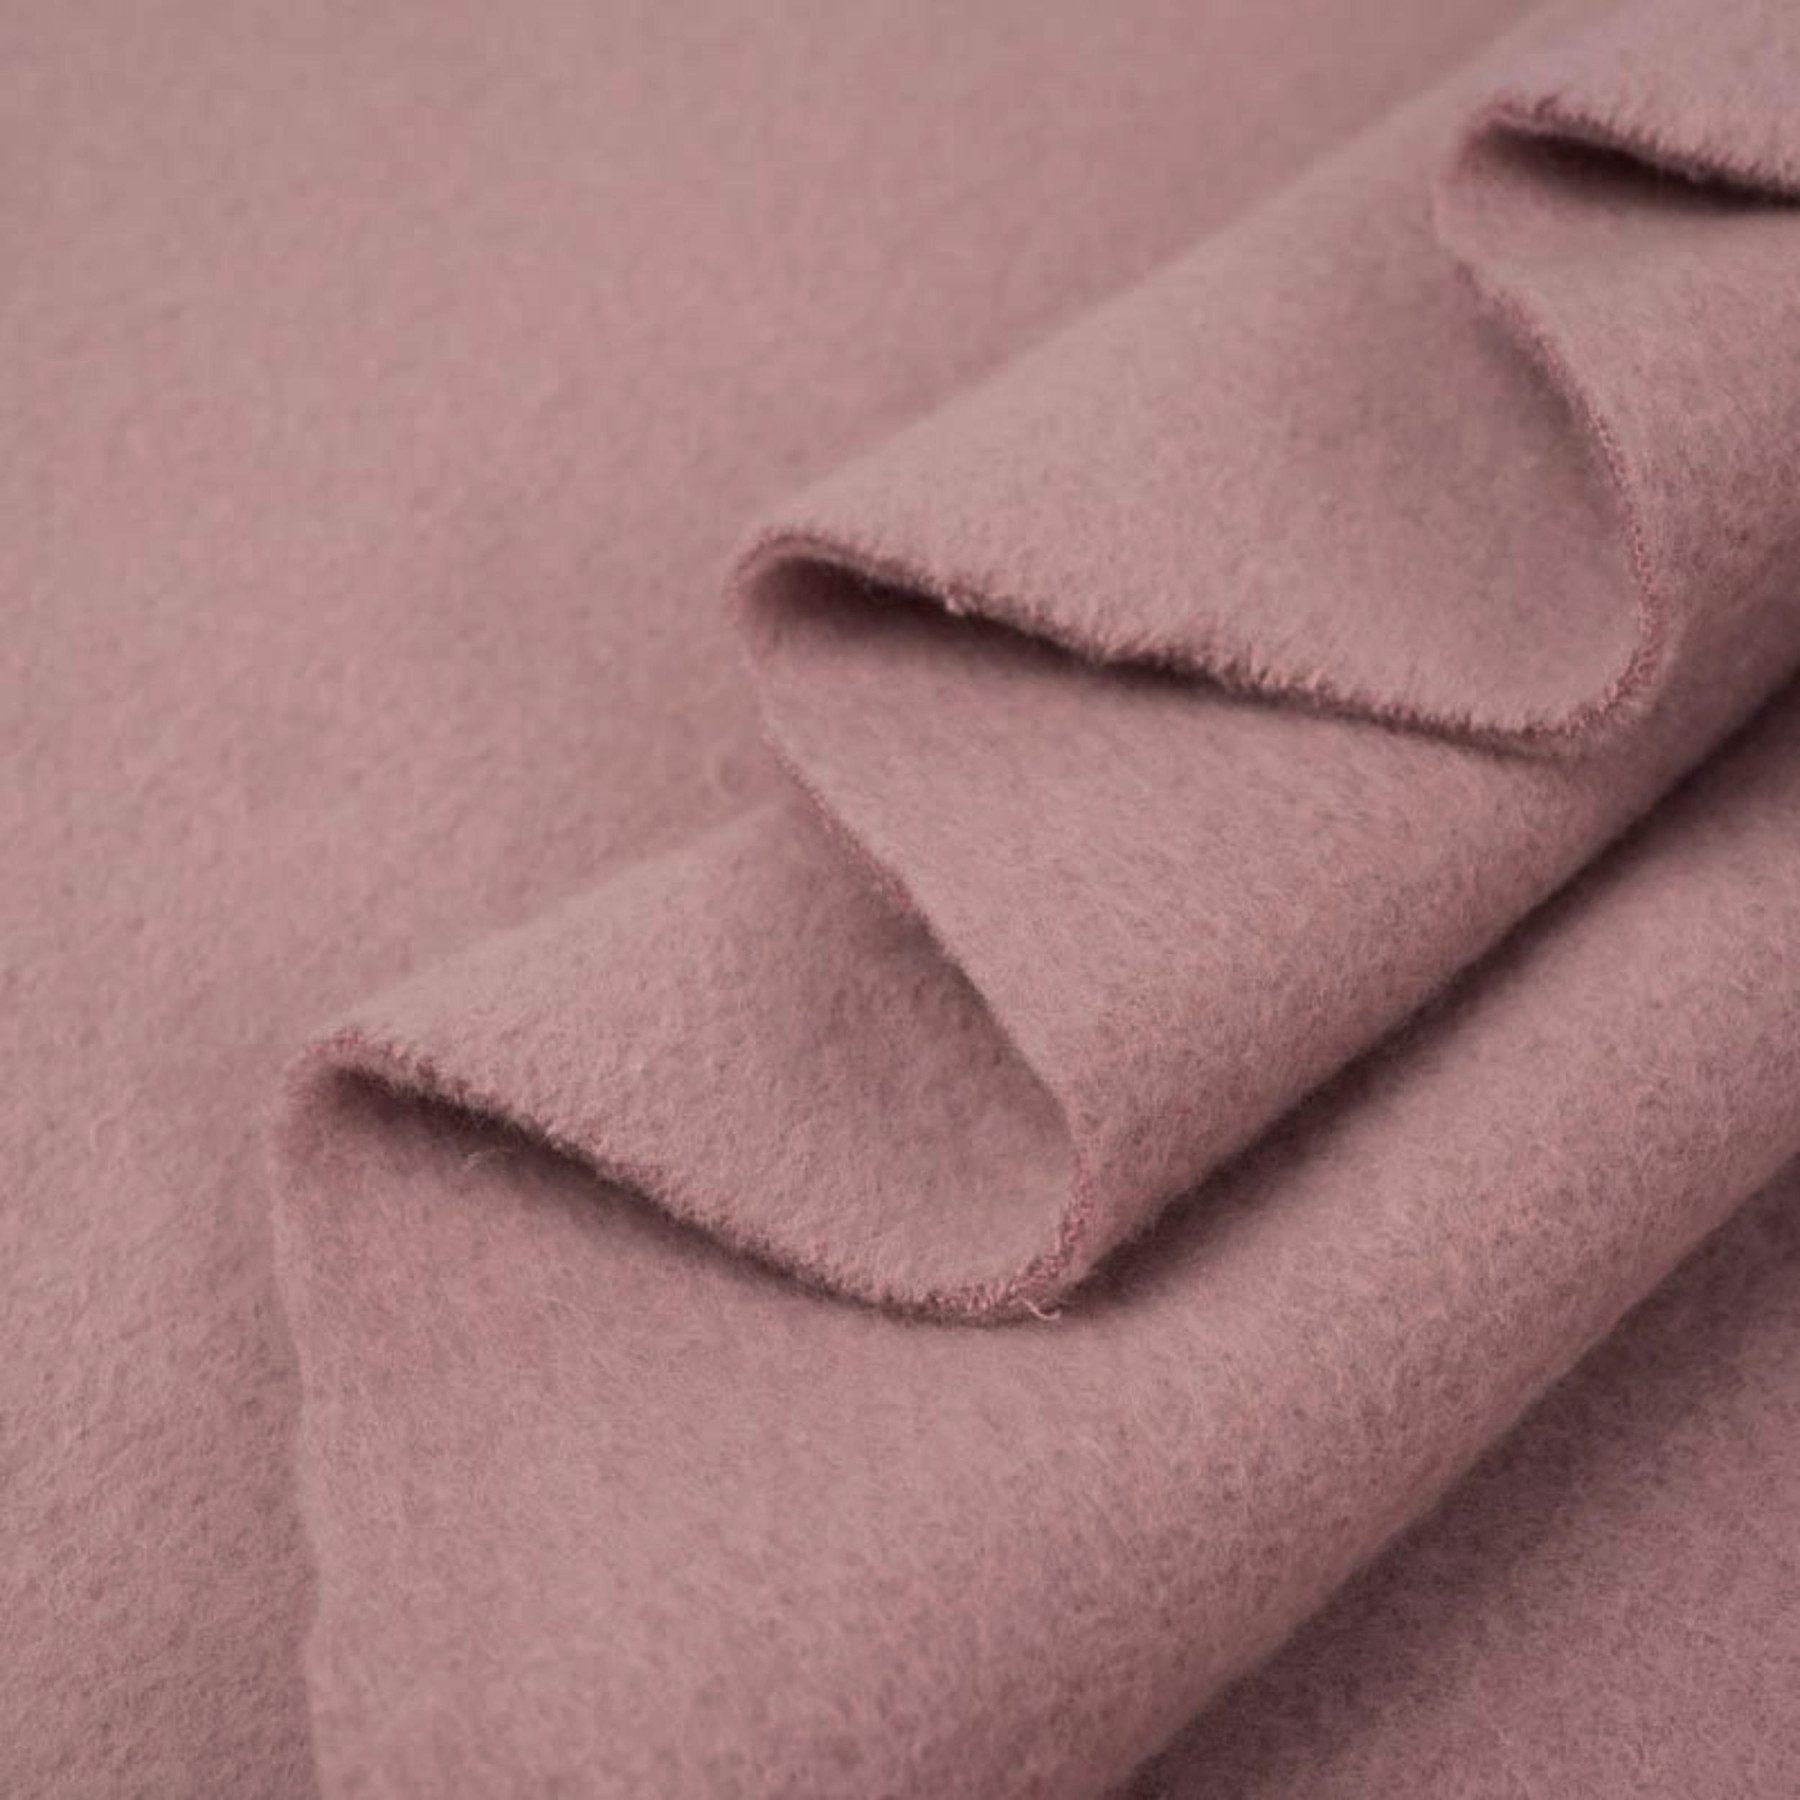 MUSTARD - Double-sided cotton fleece